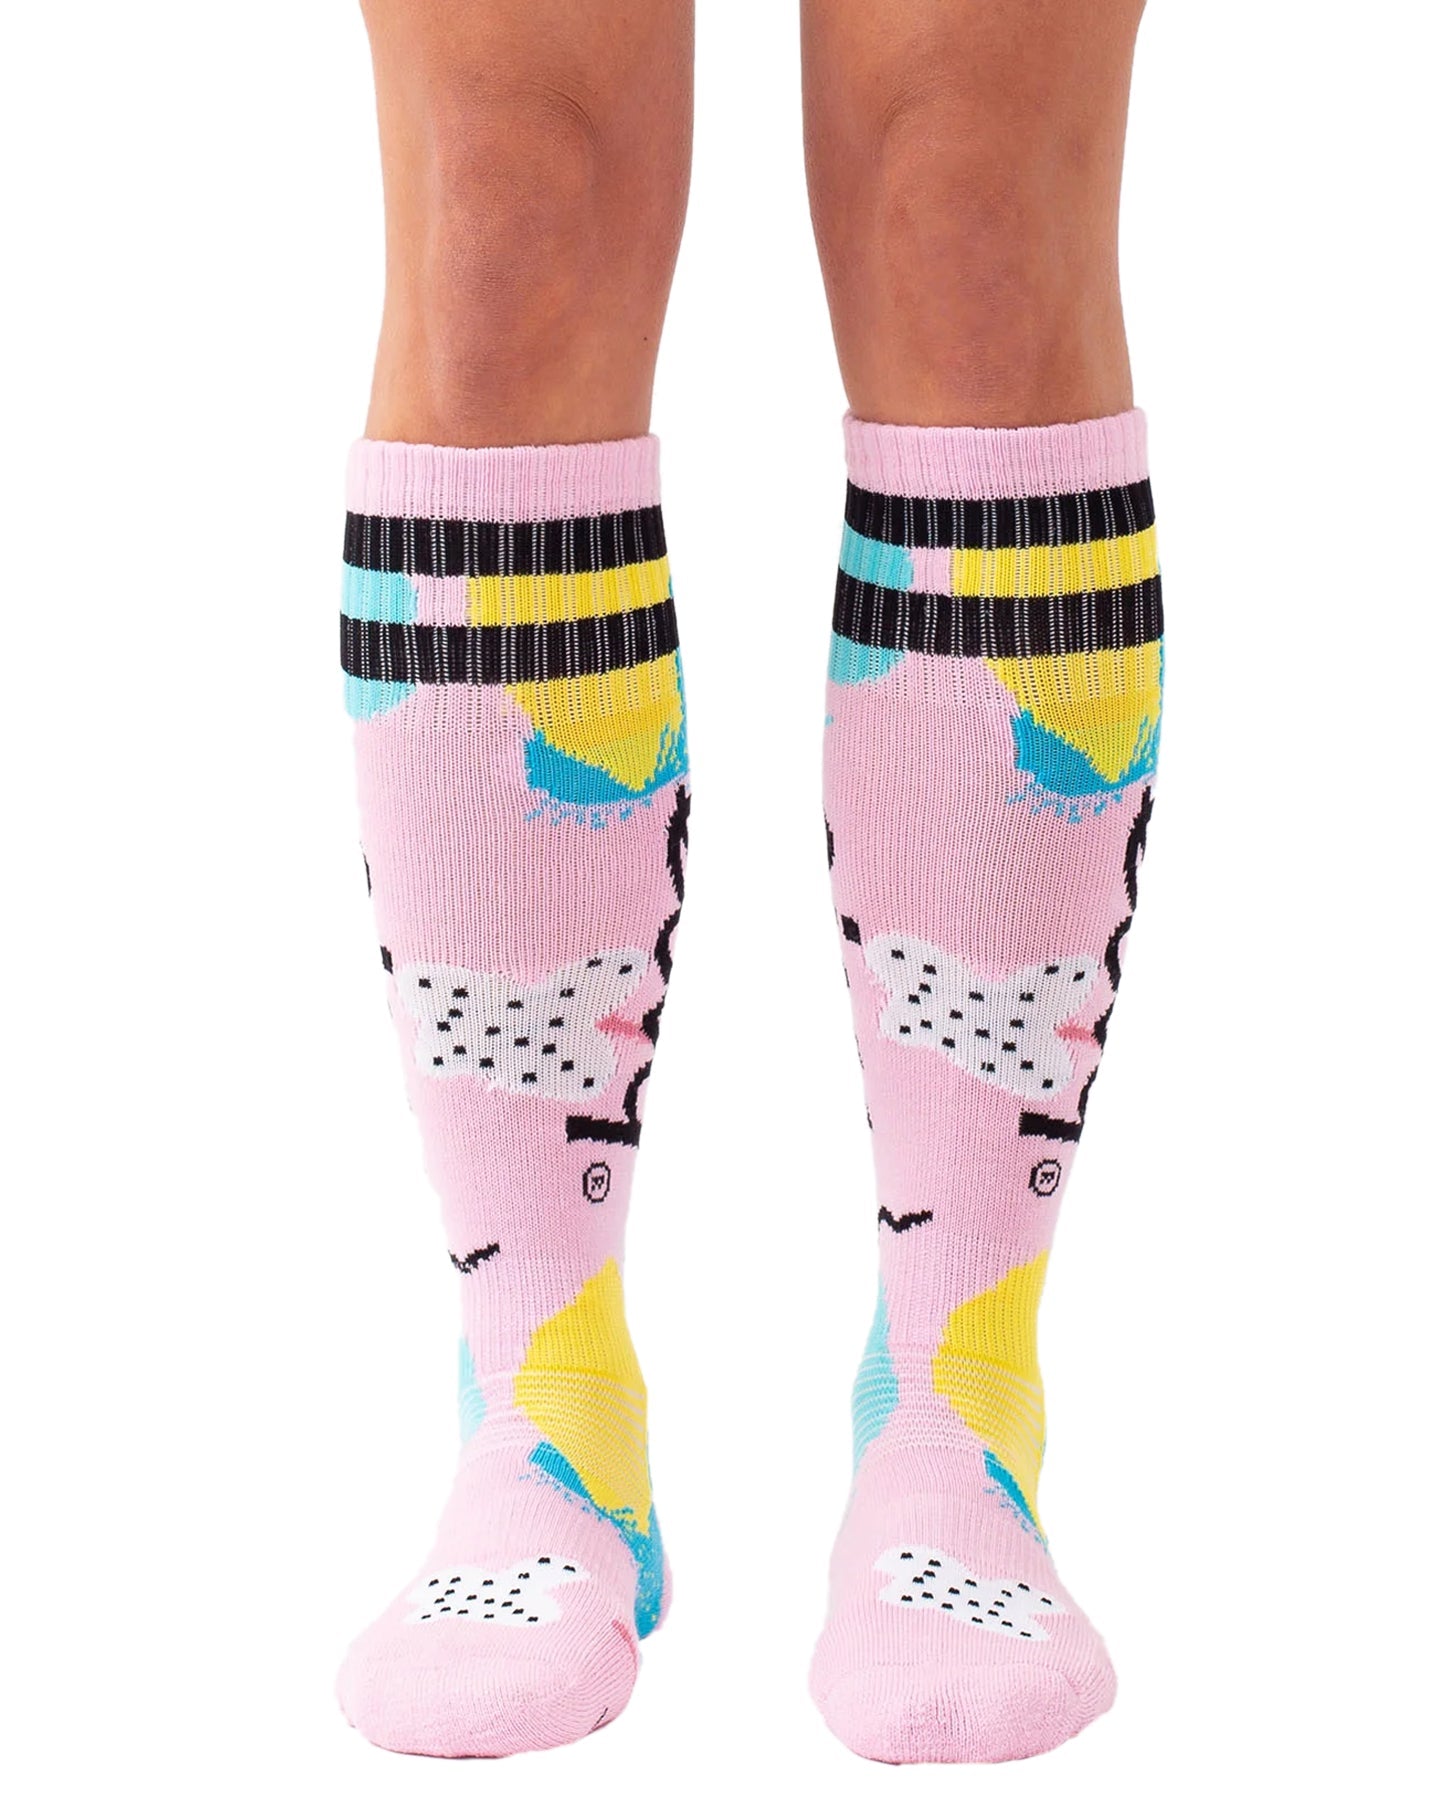 Eivy Cheerleader Women's Wool Socks - Certain Shapes Socks - Trojan Wake Ski Snow